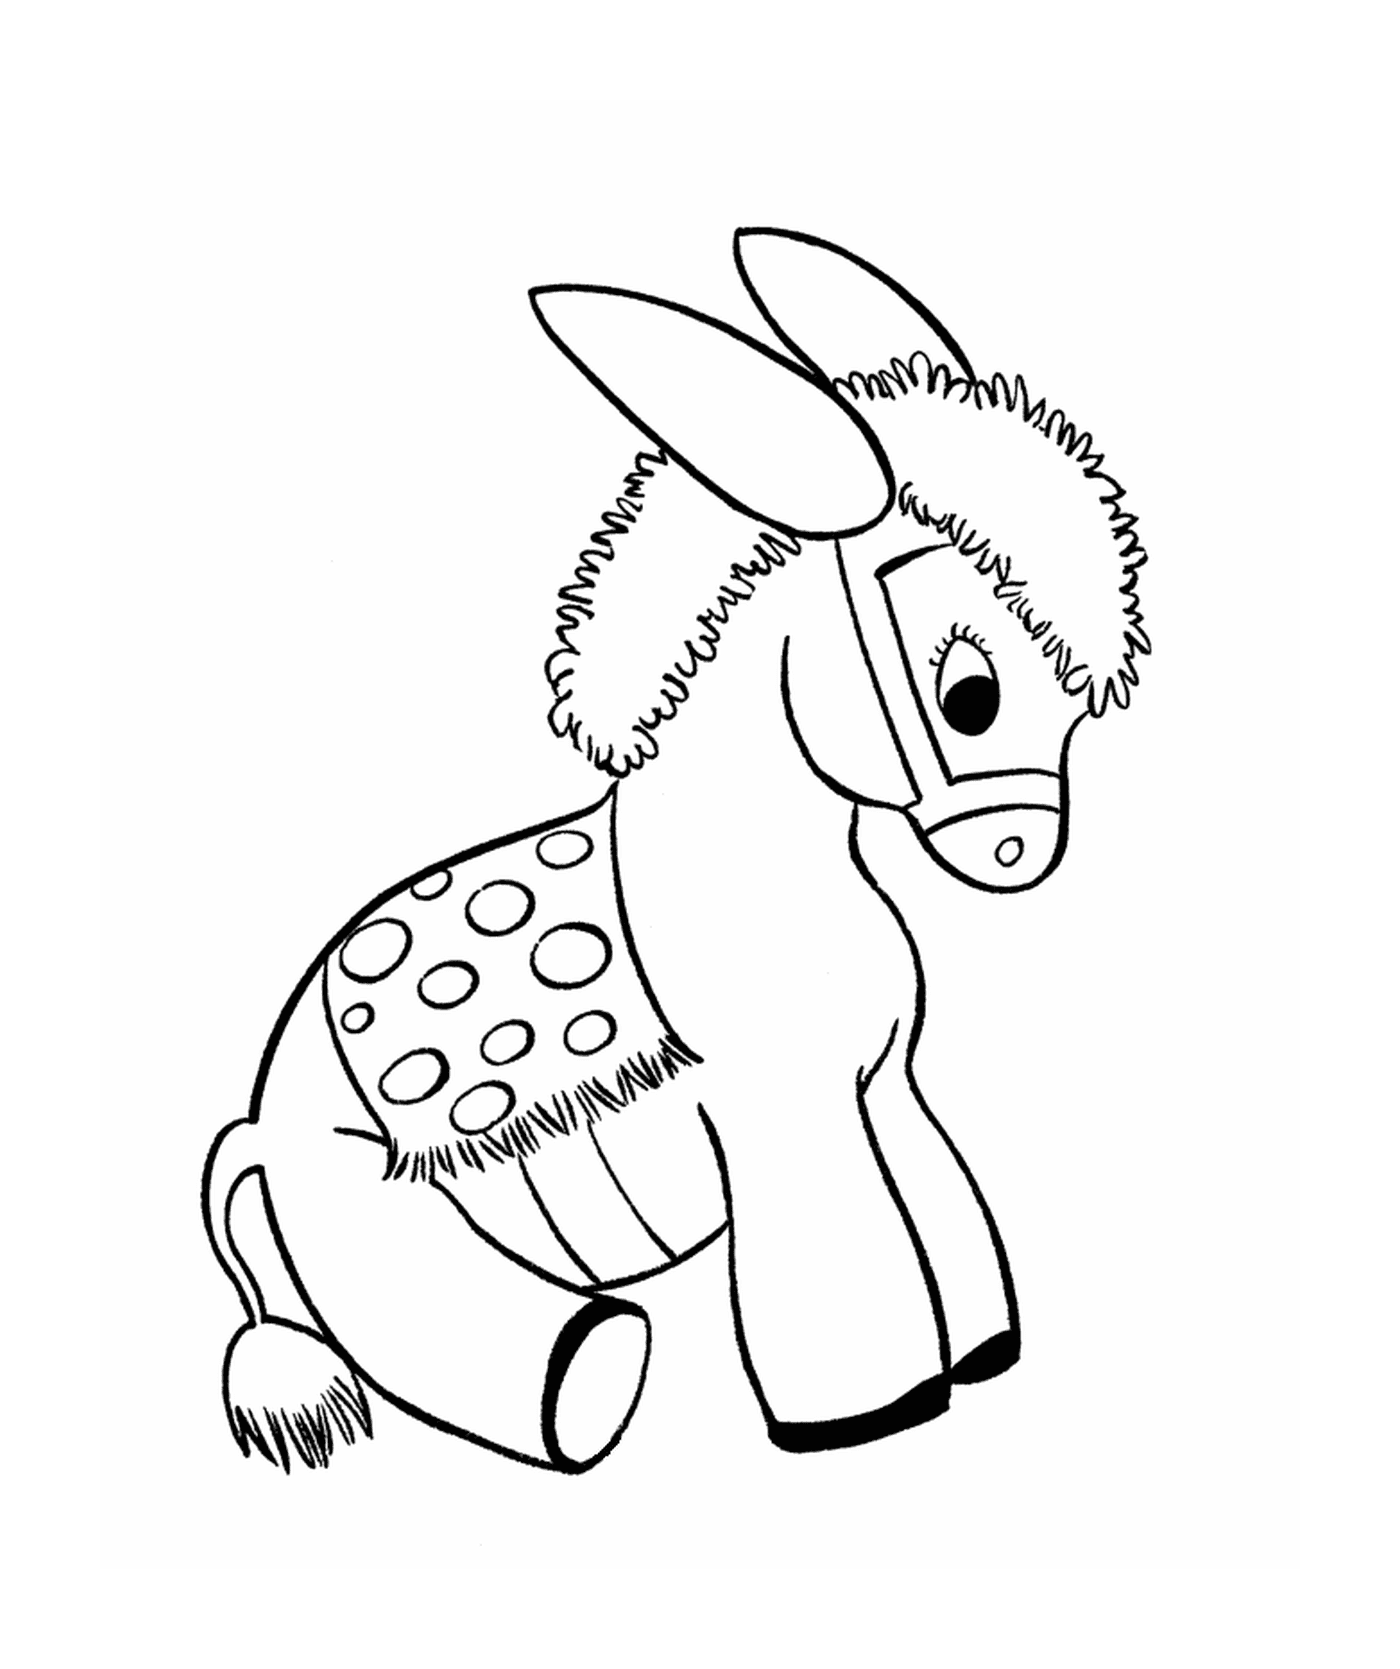  A baby donkey 